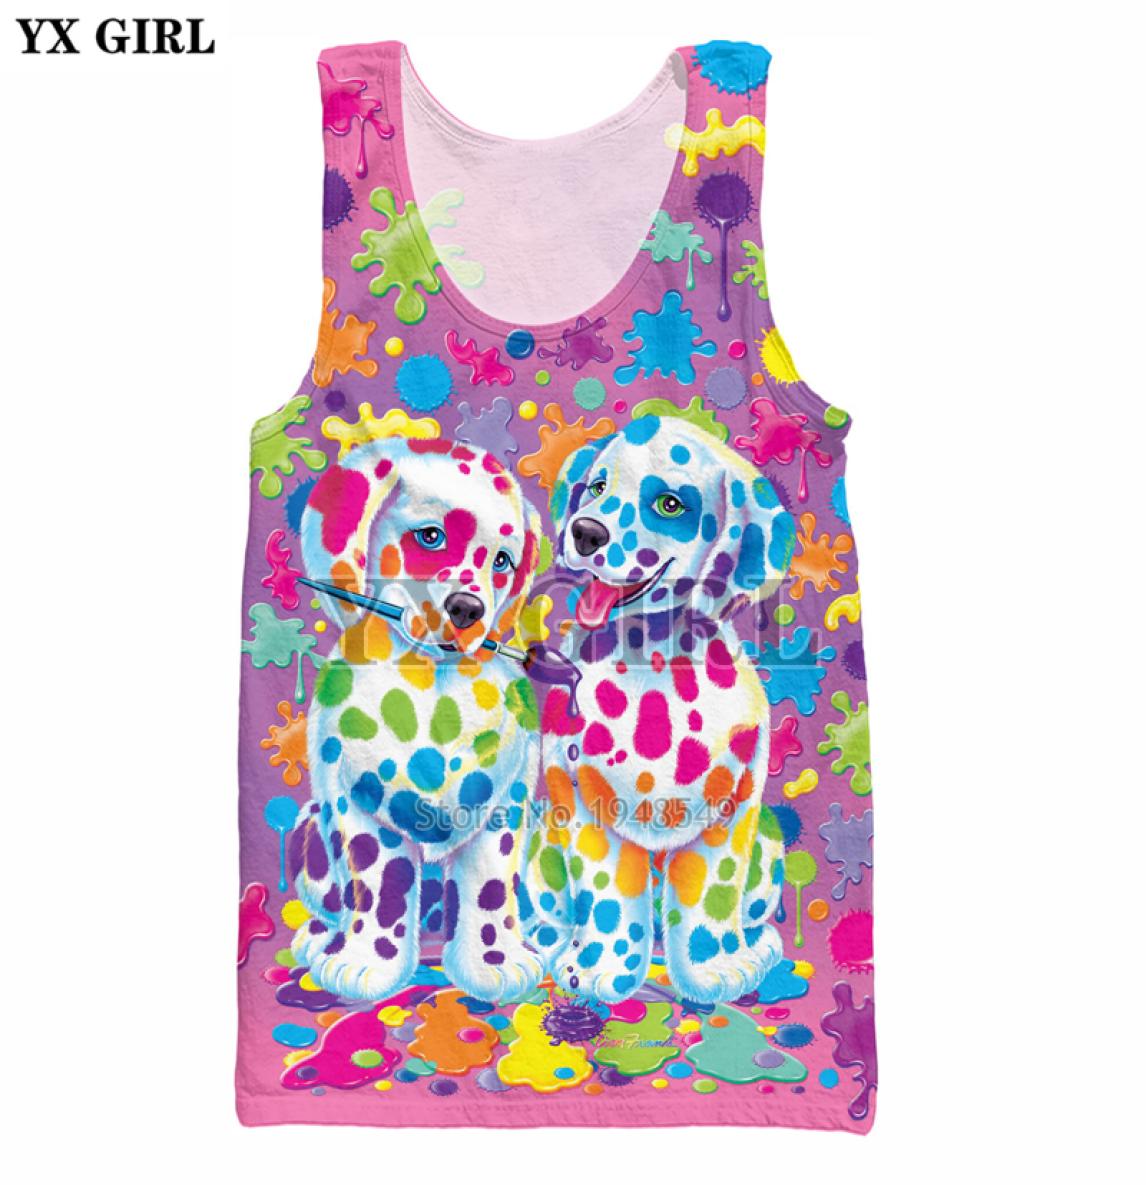 

YX GIRL summer style Cool vest Fashion Mens 3d Vest Cute animal Lisa Frank Print Unisex Casual Tank tops 2203095164679, White